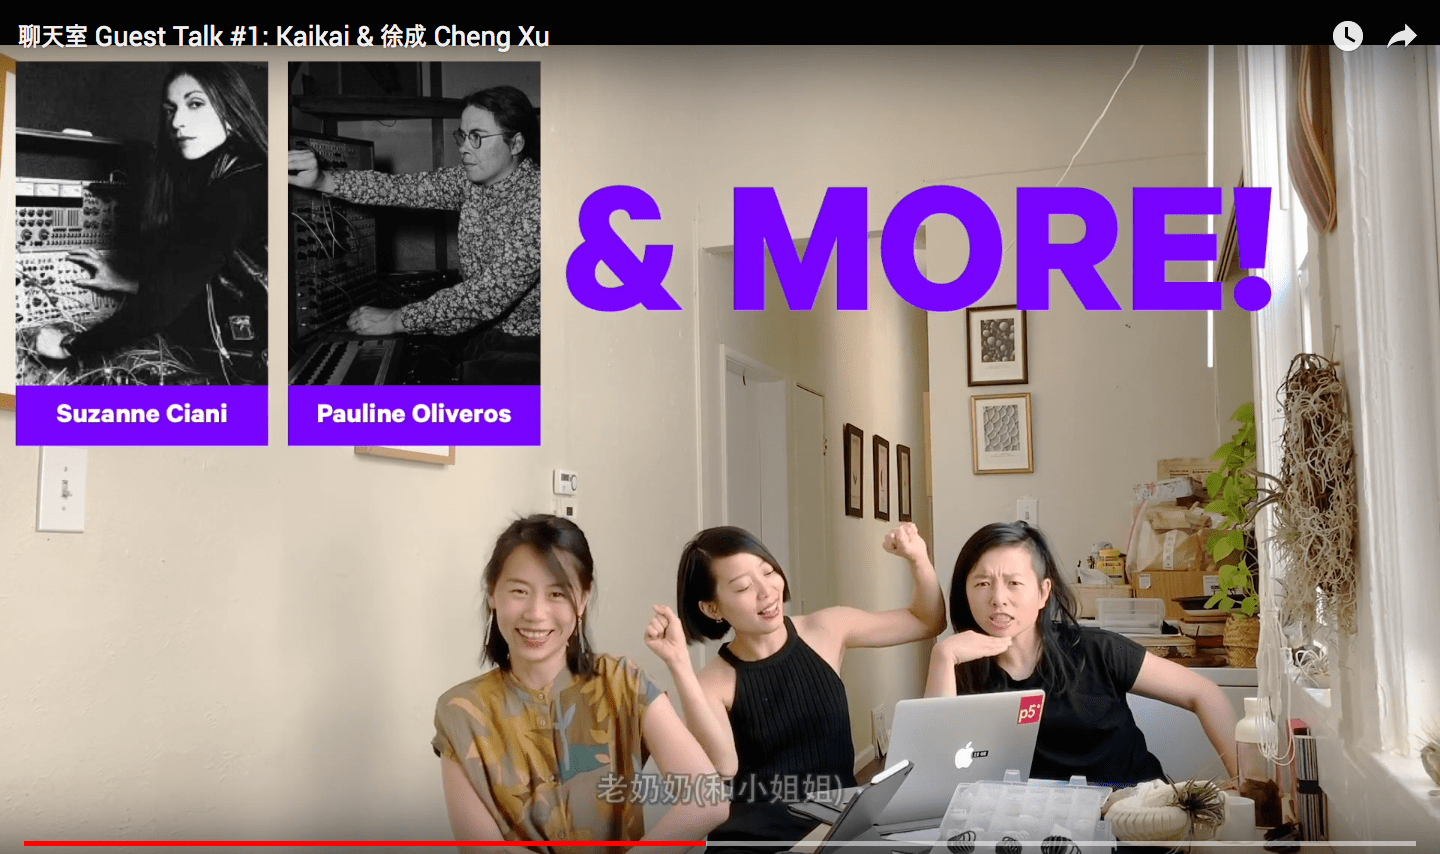 A guest talk video (Guest Talk #1) on Qtv by Qianqian Ye, featuring Kaikai and Cheng Xu.